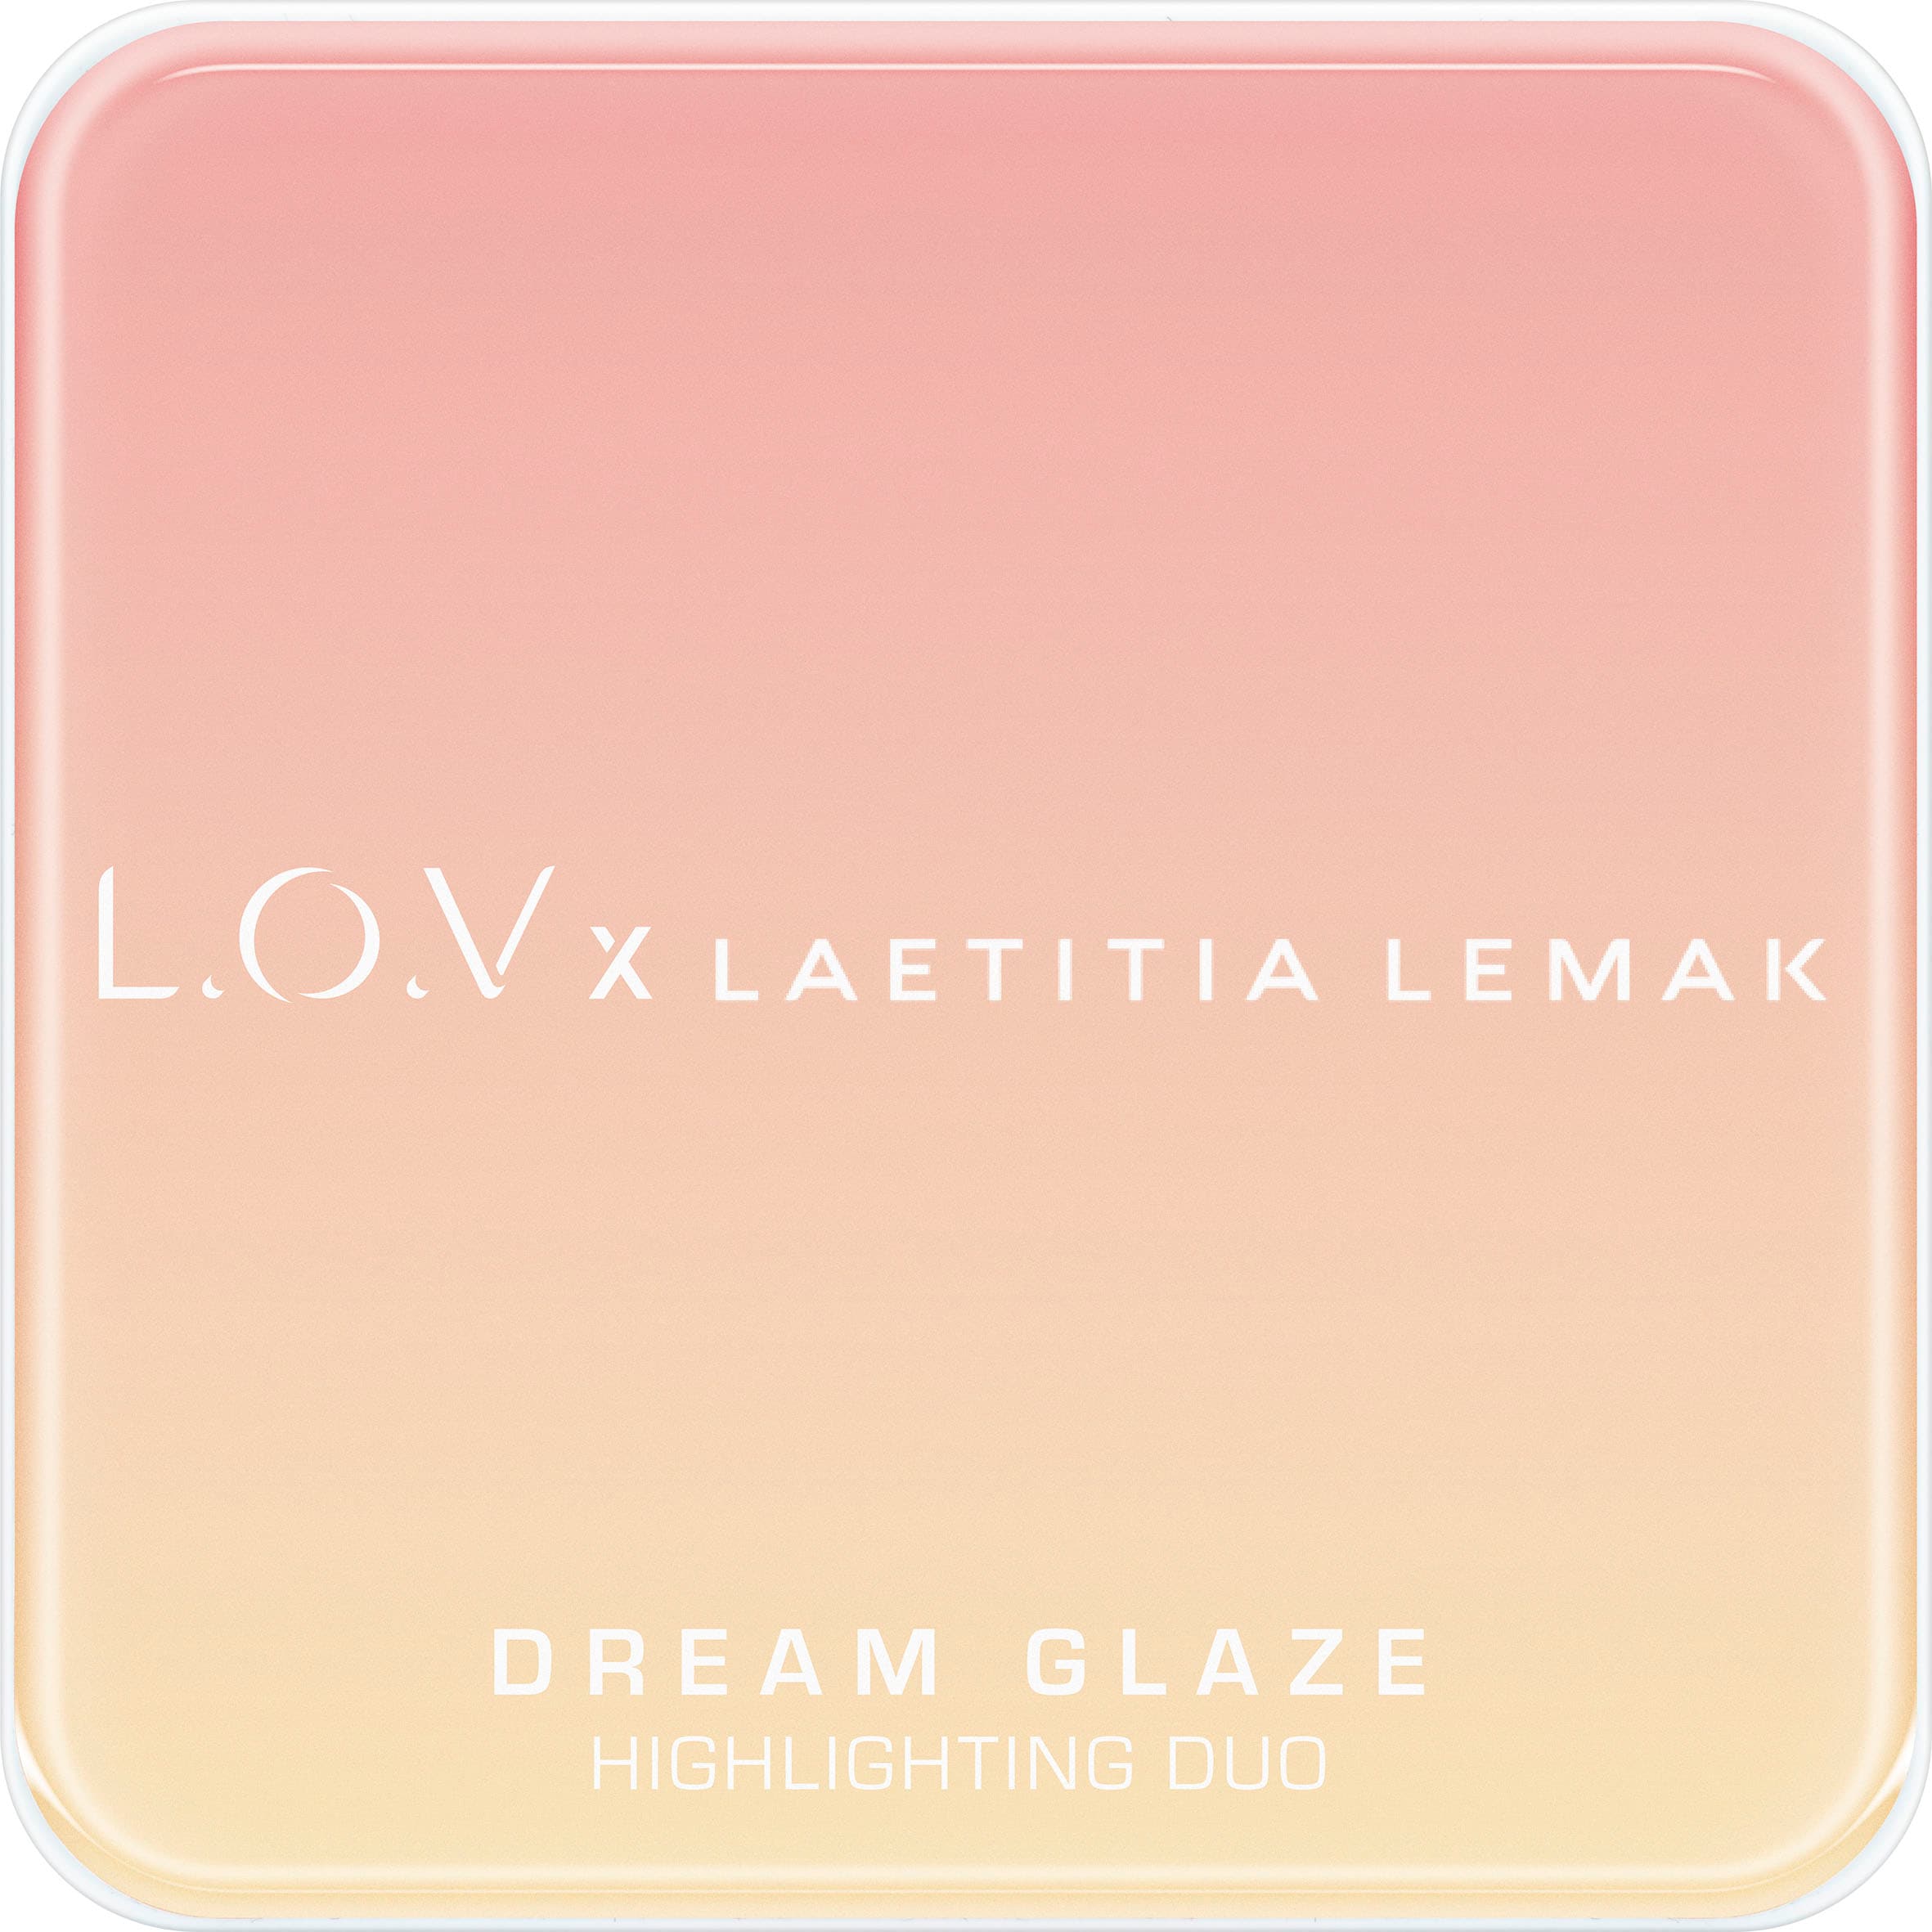 x LAETITIA DREAM online Duo« »L.O.V LEMAK kaufen L.O.V GLAZE Highlighter-Palette Highlighting